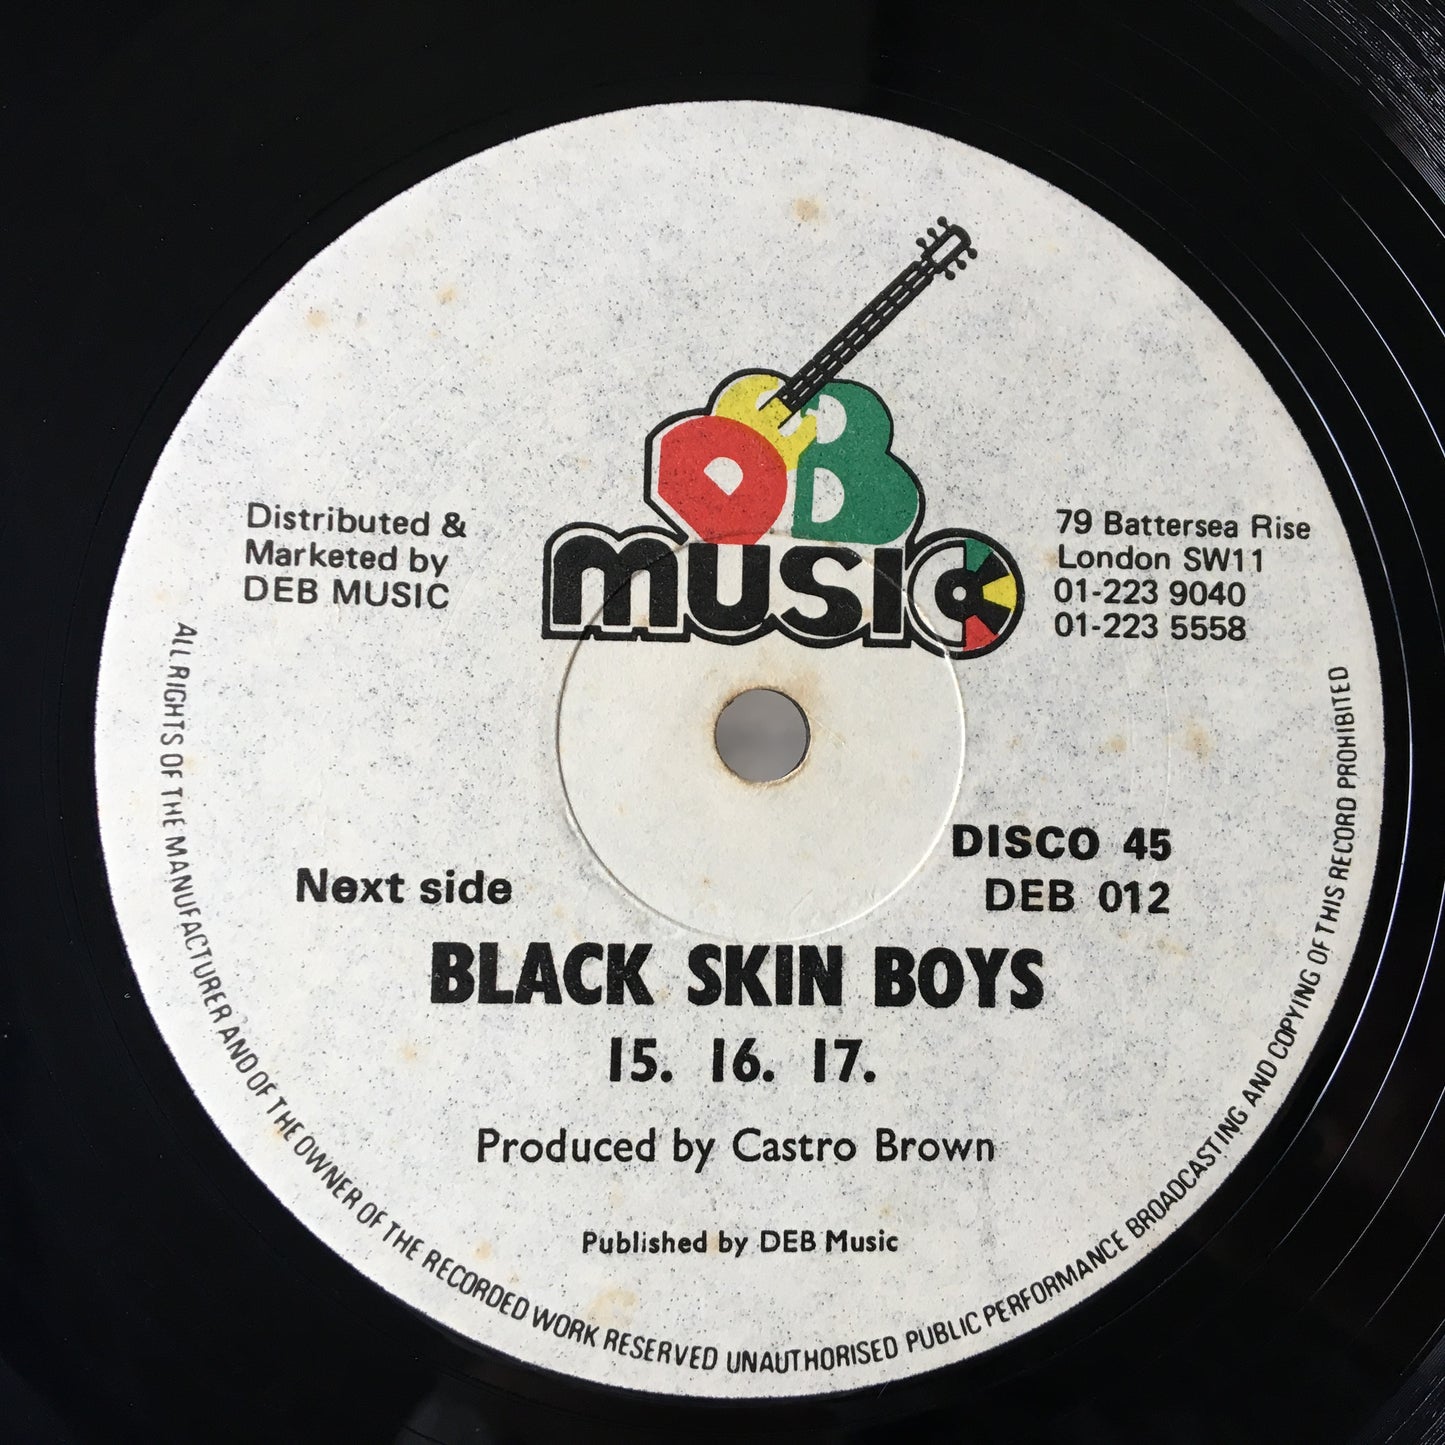 15. 16. 17. – Good Times / Black Skin Boys